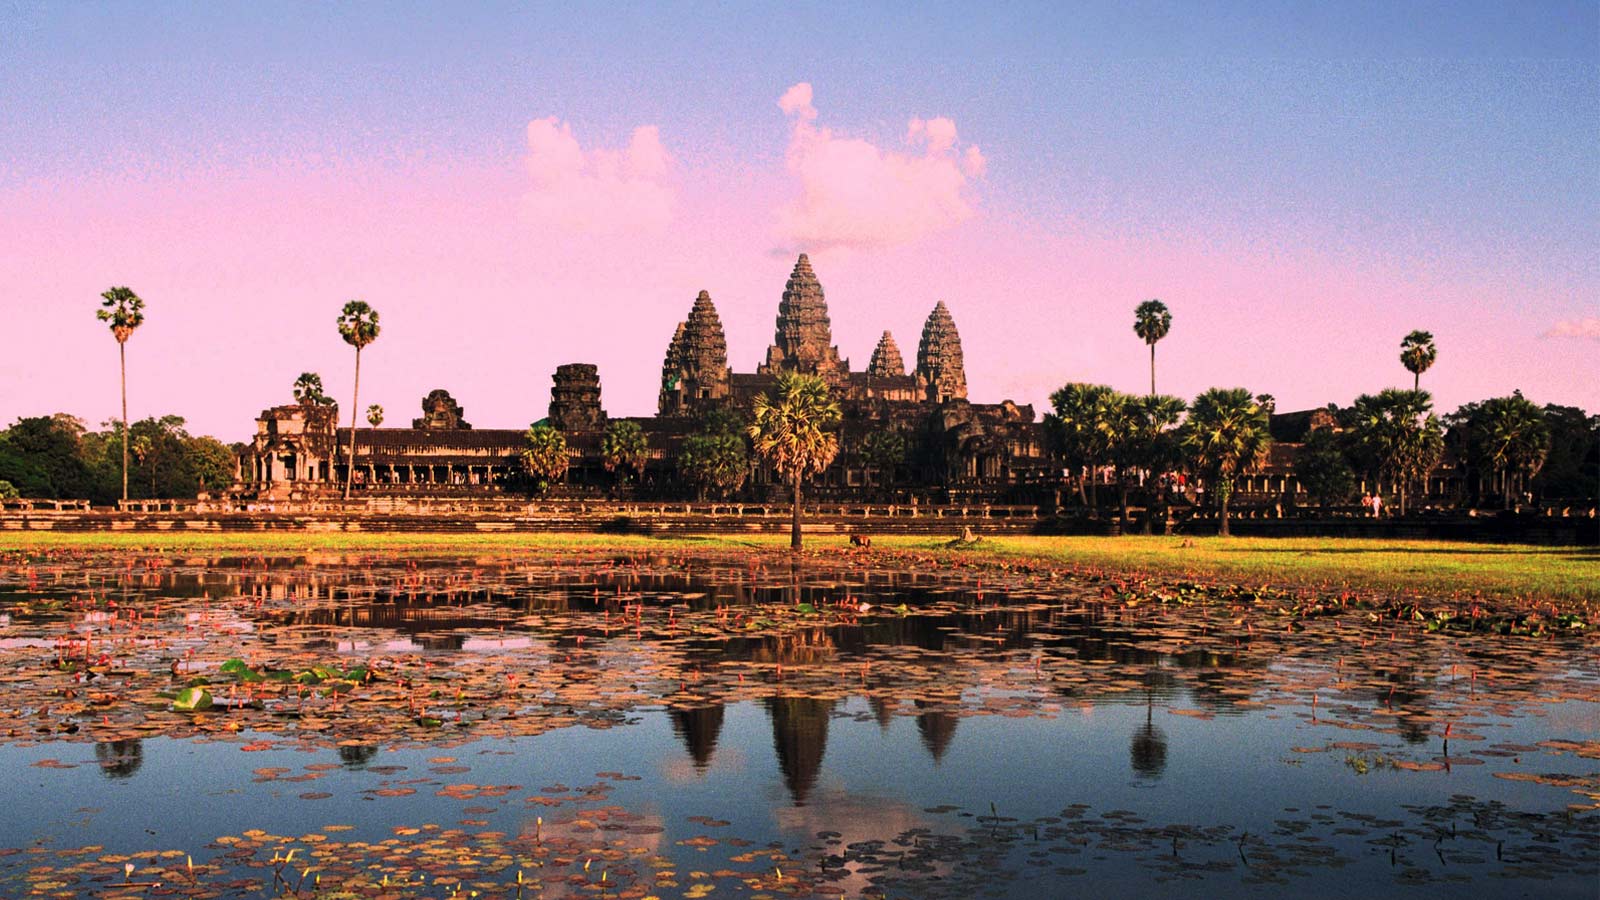 انگکوروات، از عجایت شگفت انگیز کامبوج